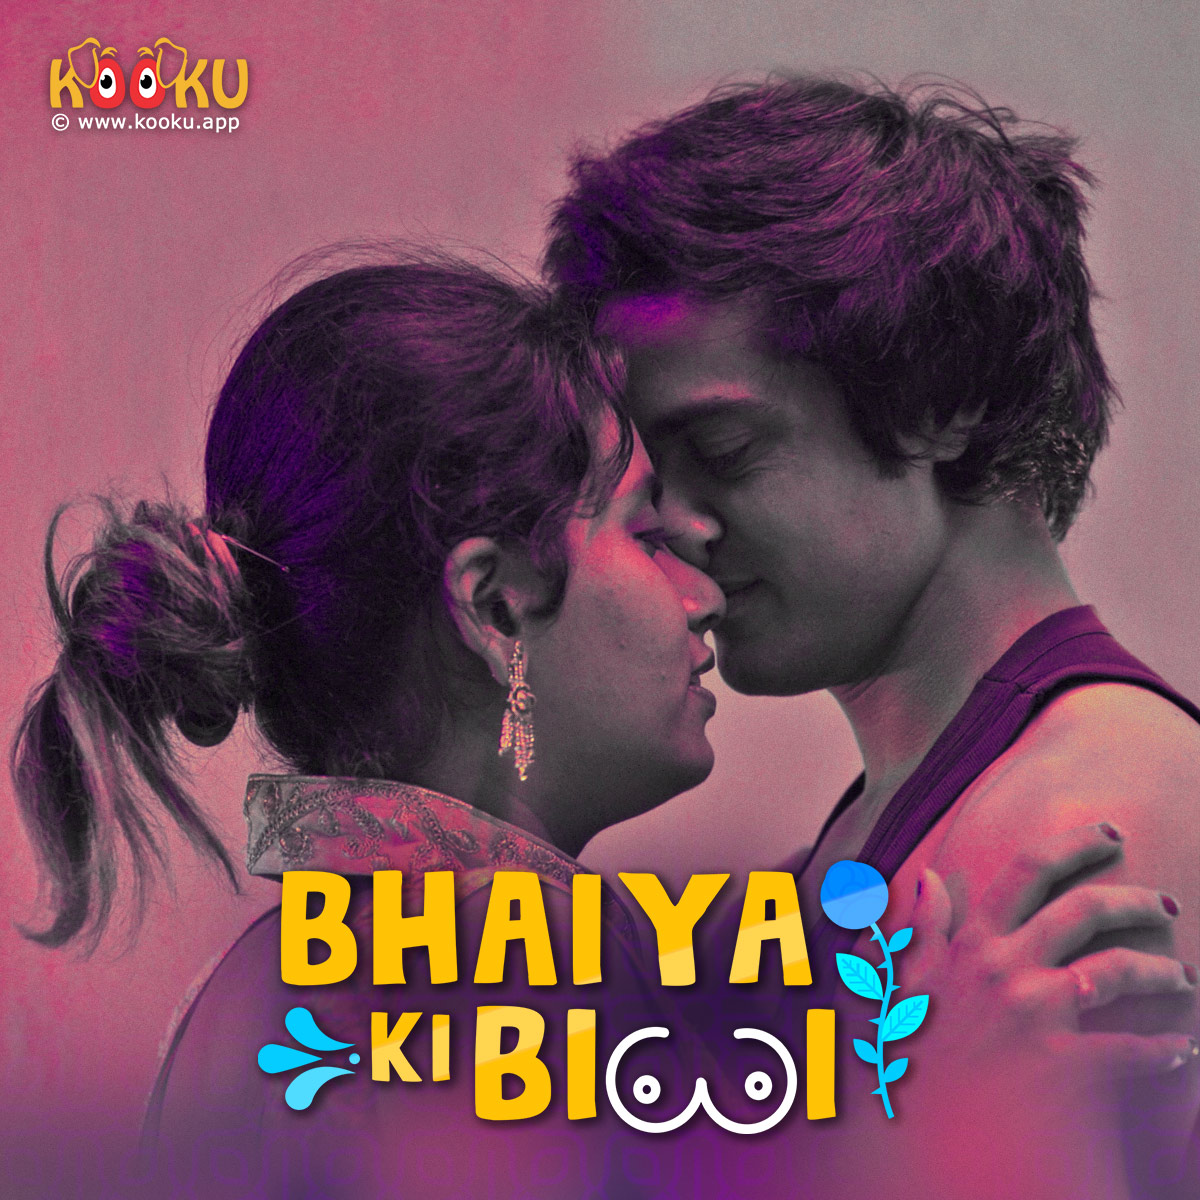 You are currently viewing 18+ Bhaiya Ki Biwi 2020 S01 Hindi KOOKU App Web Series Official Trailer 720p HDRip 50MB Download & Watch Online